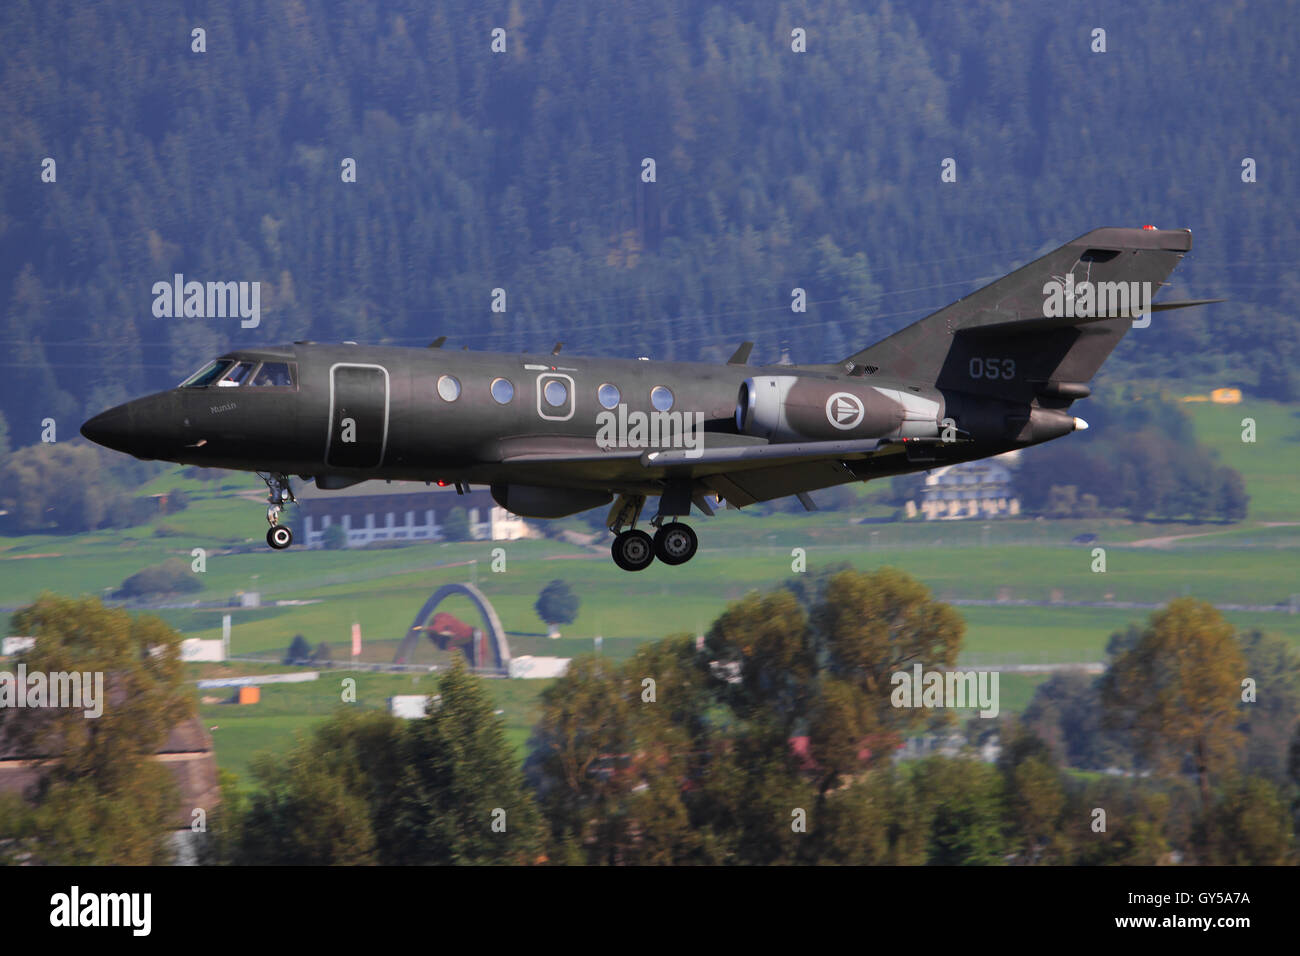 SLIAC, Slovacchia - 30 agosto: dassault F20 a SIAF in airshow Sliac, Slovacchia Foto Stock